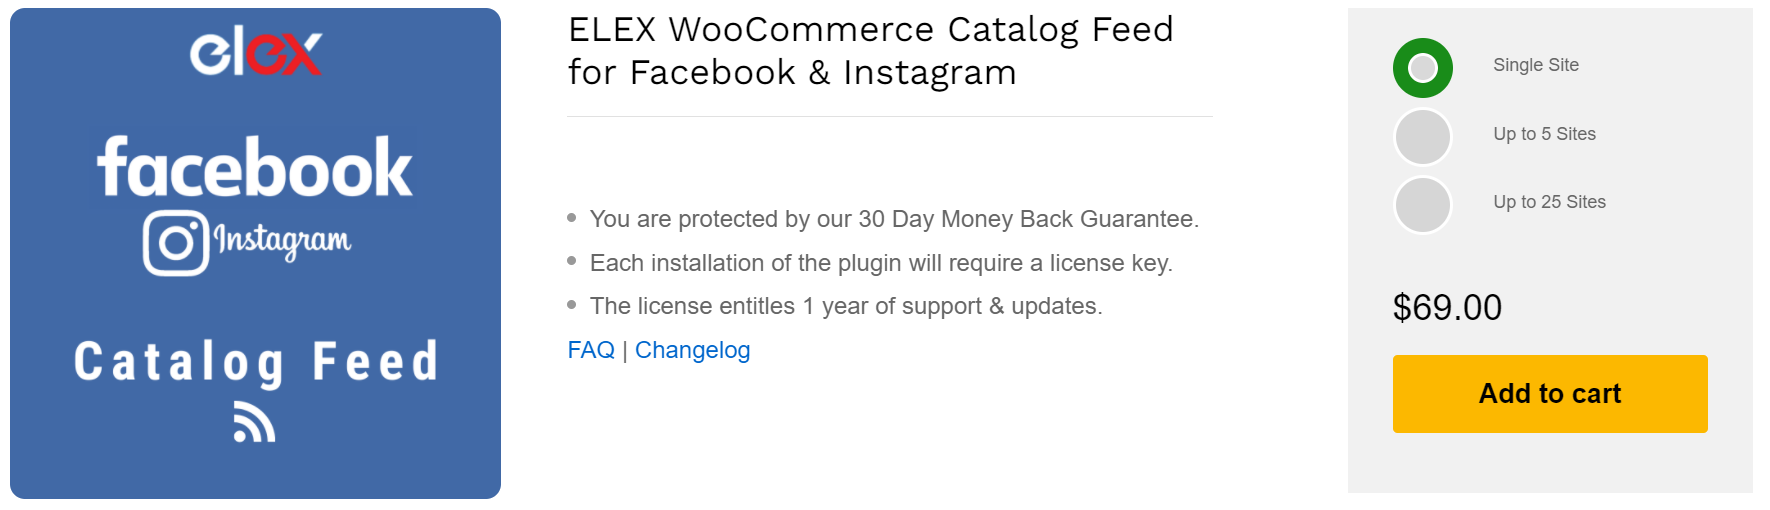 ELEX WooCommerce Catalog Feed for Facebook & Instagram Plugin: Getting Started